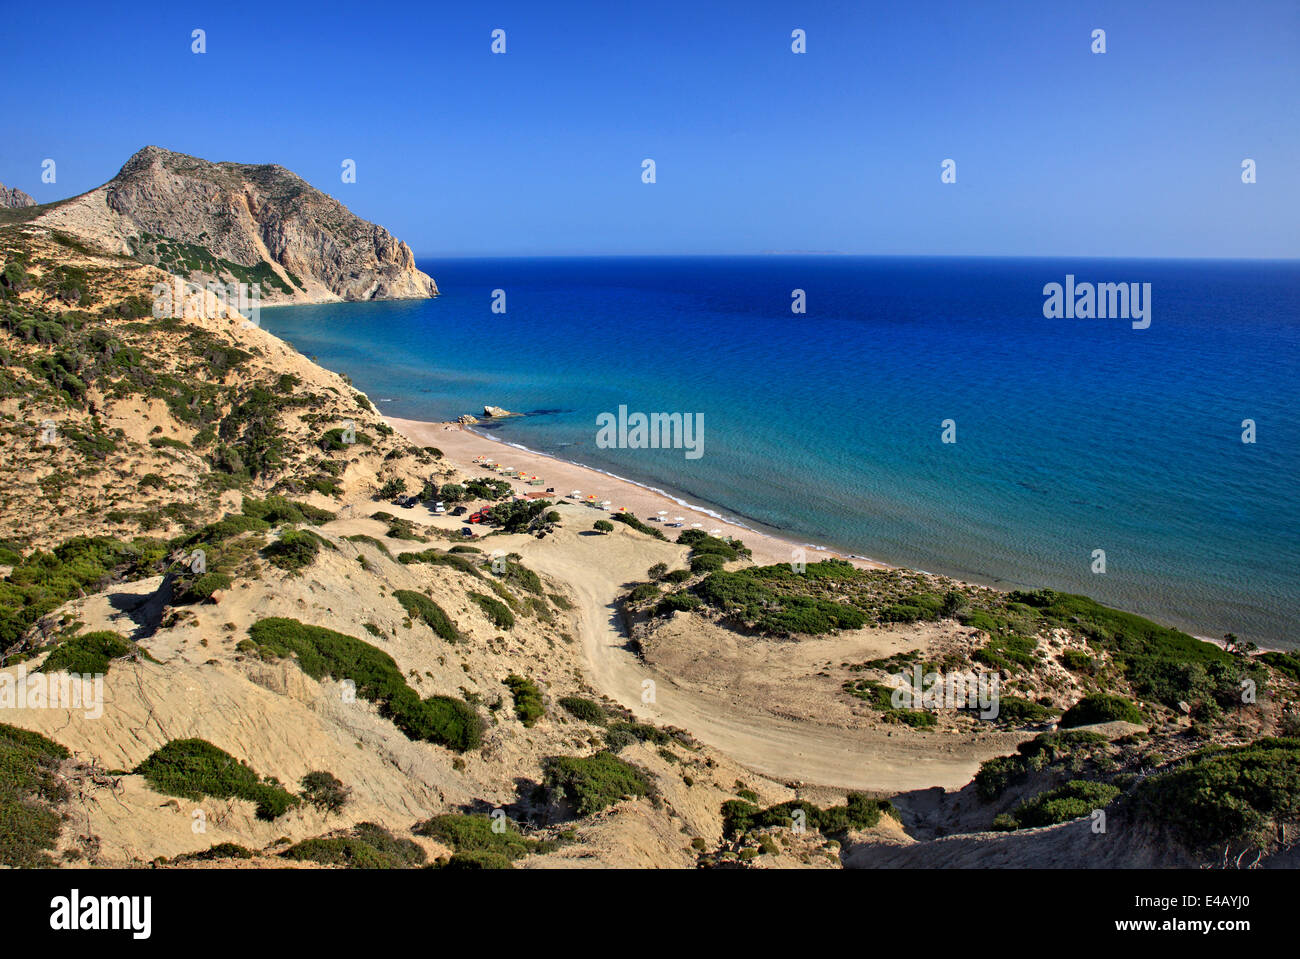 Kavo Paradiso beach (Hilandriou bay), area of Kefalos, Kos island, Dodecanese, Greece. Stock Photo